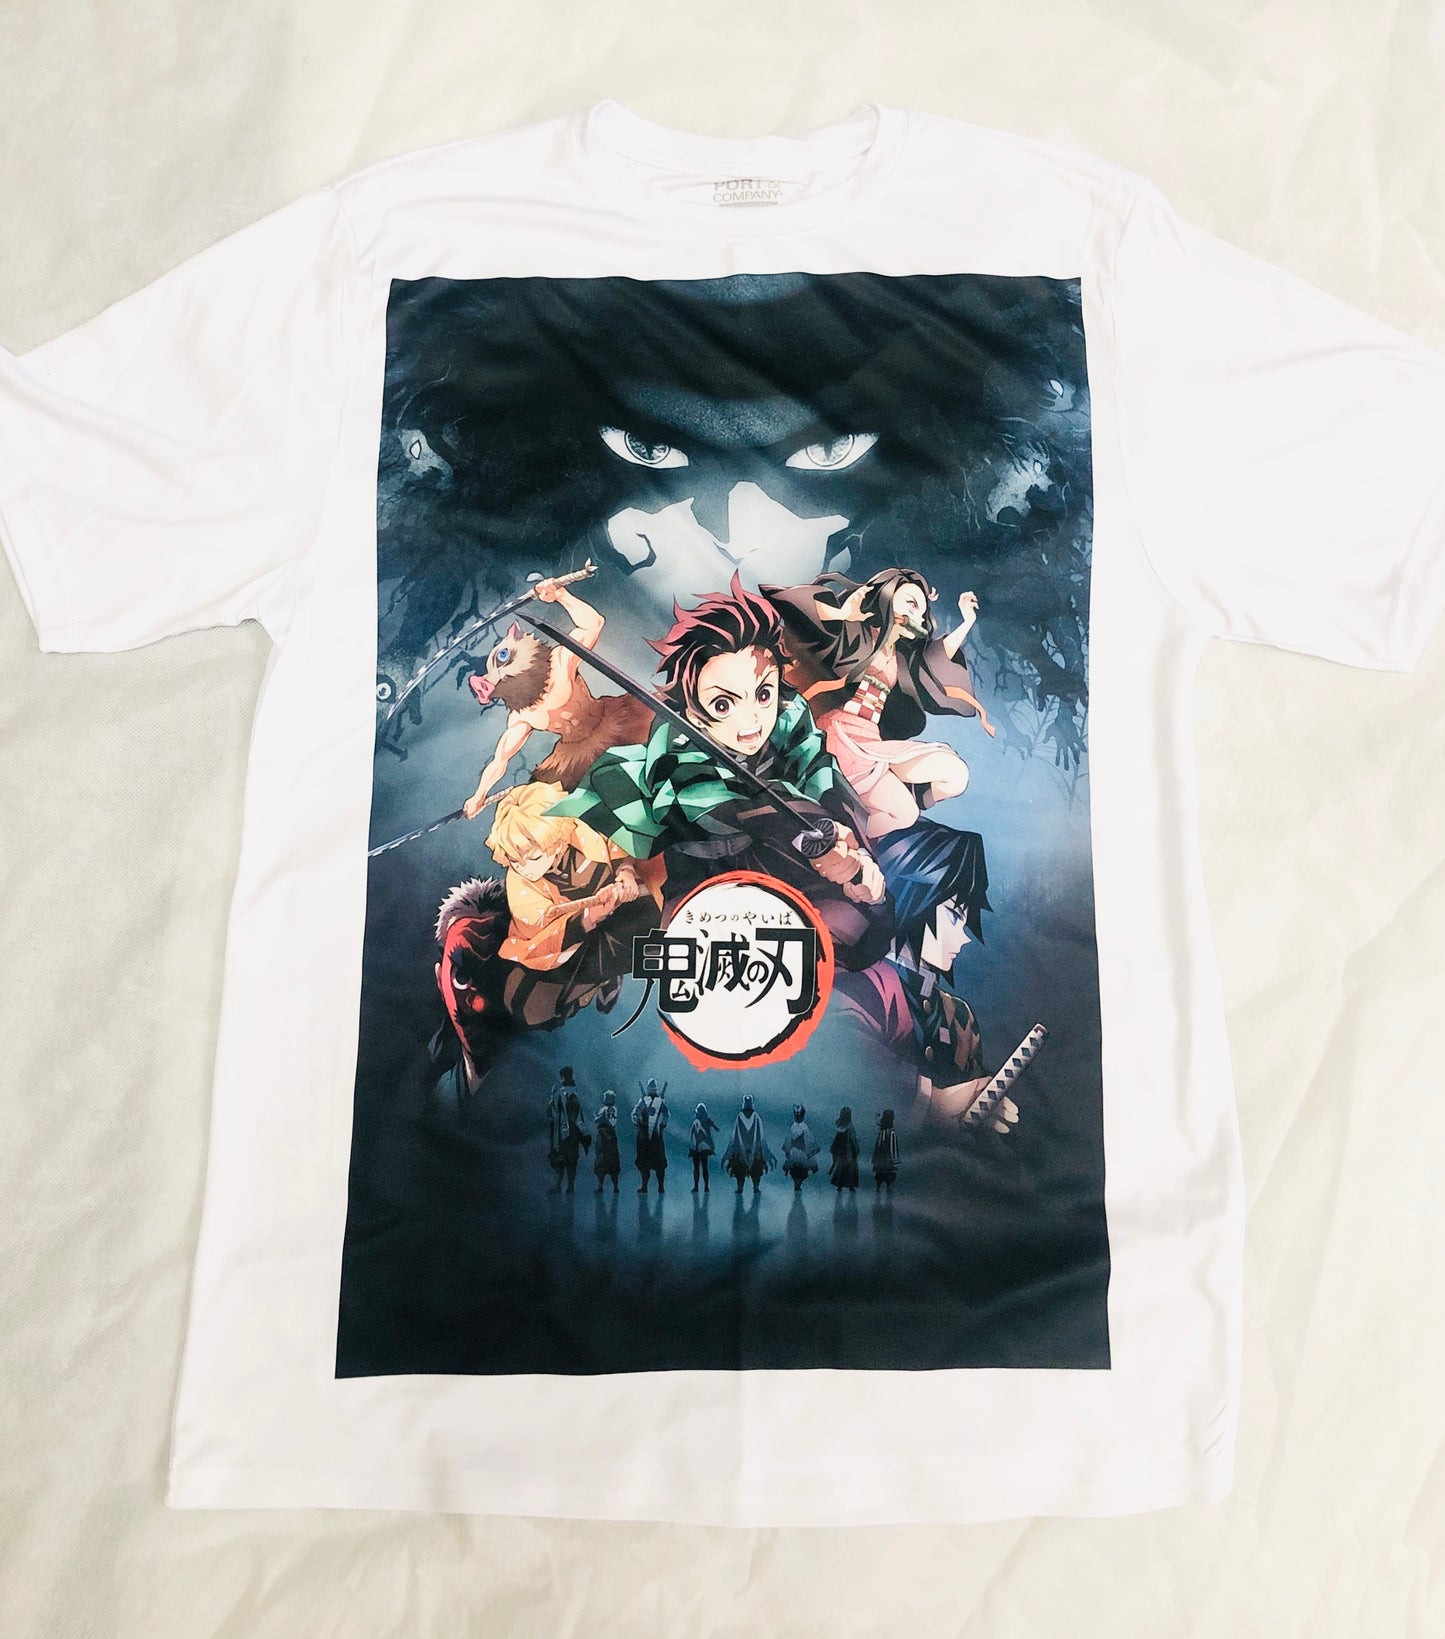 Anime Demon Slayer T-Shirt - Super Anime Store FREE SHIPPING FAST SHIPPING USA